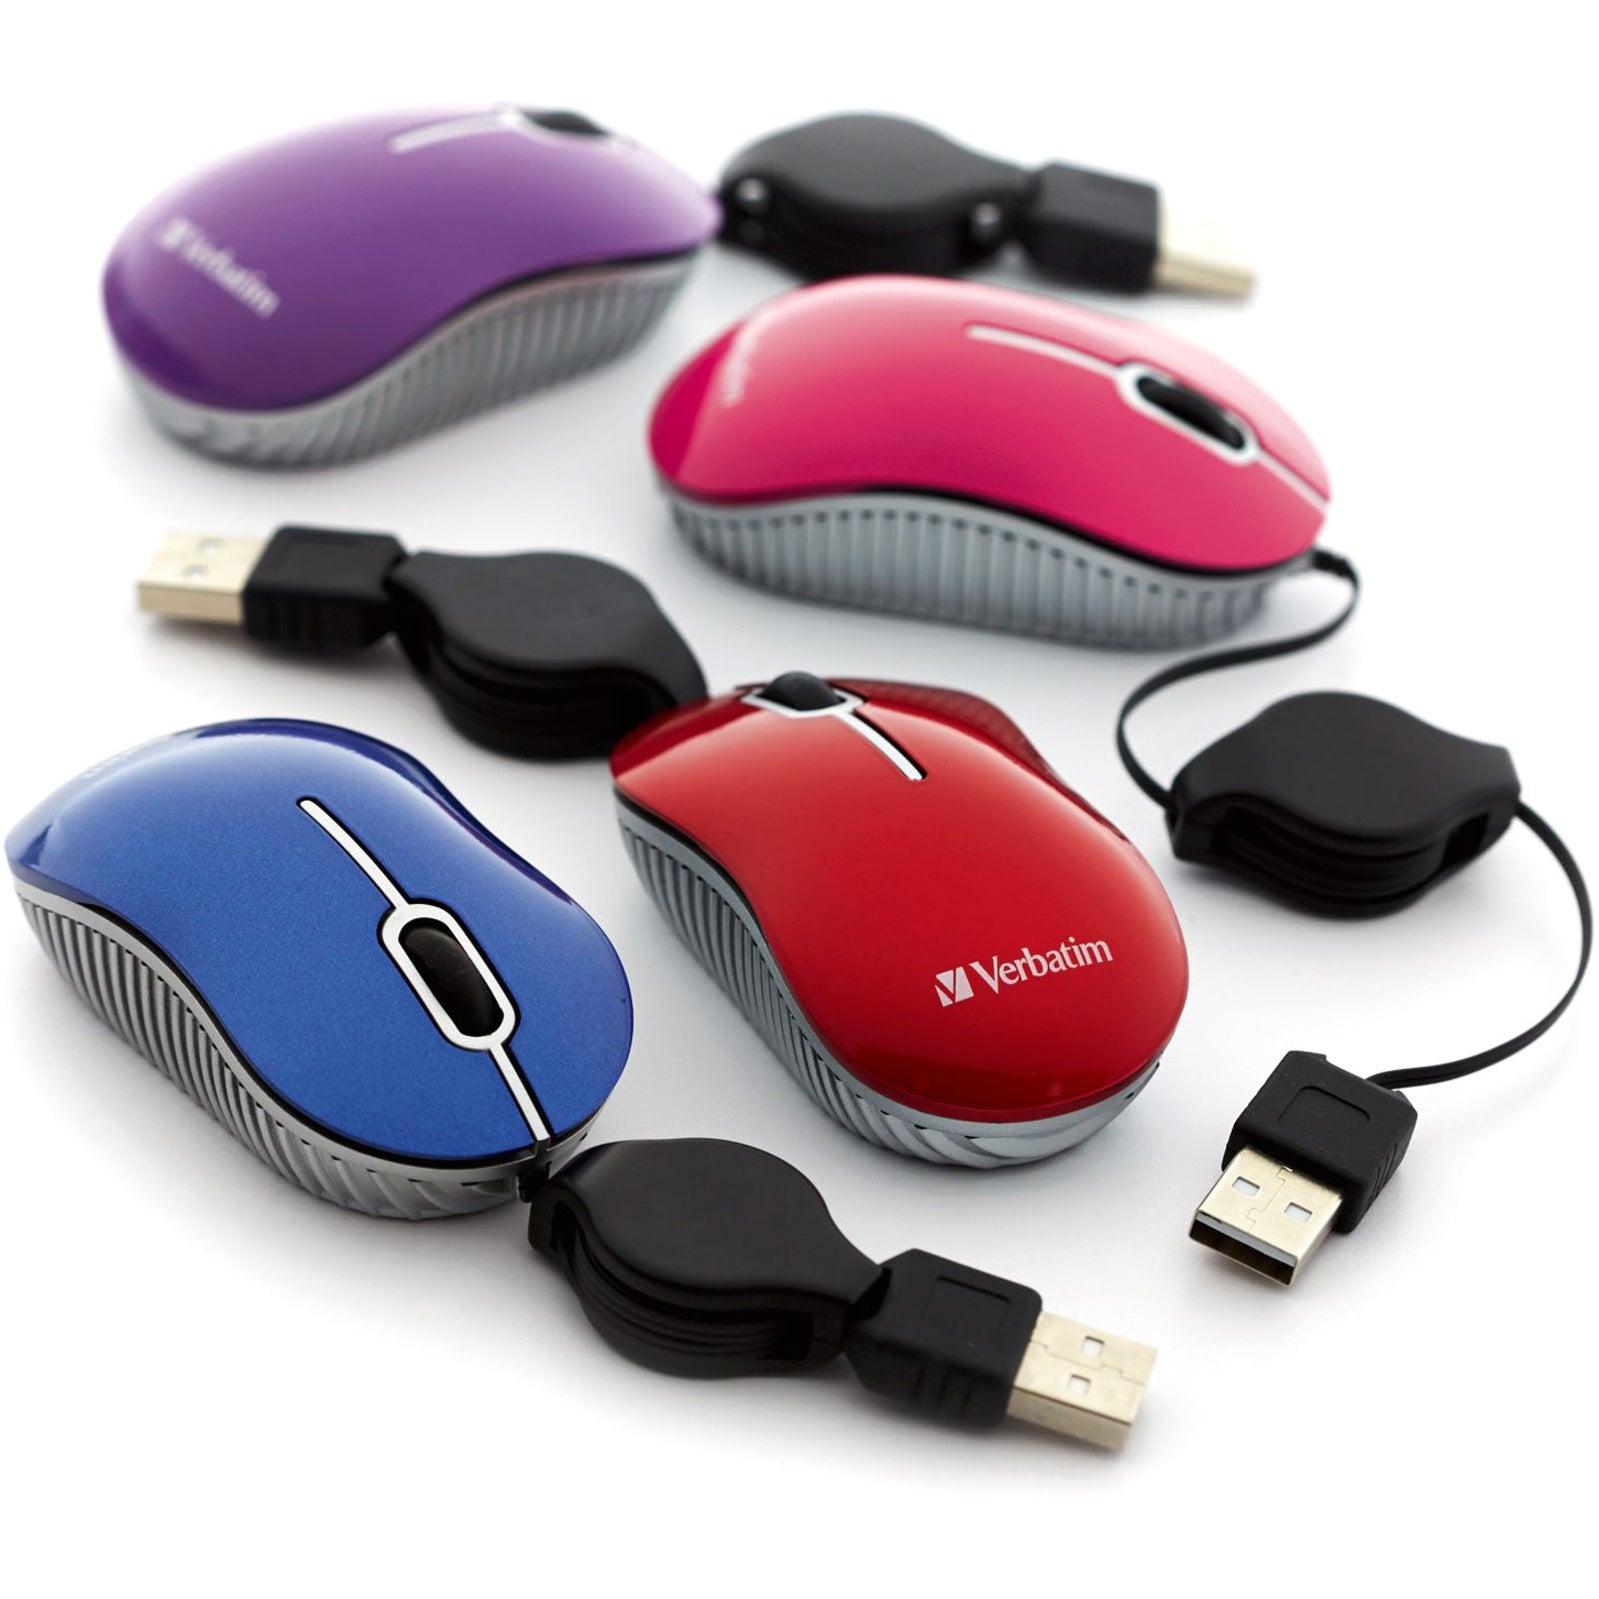 Verbatim 98618 Mini Travel Optical Mouse, Pink, USB 2.0, 1 Year Warranty